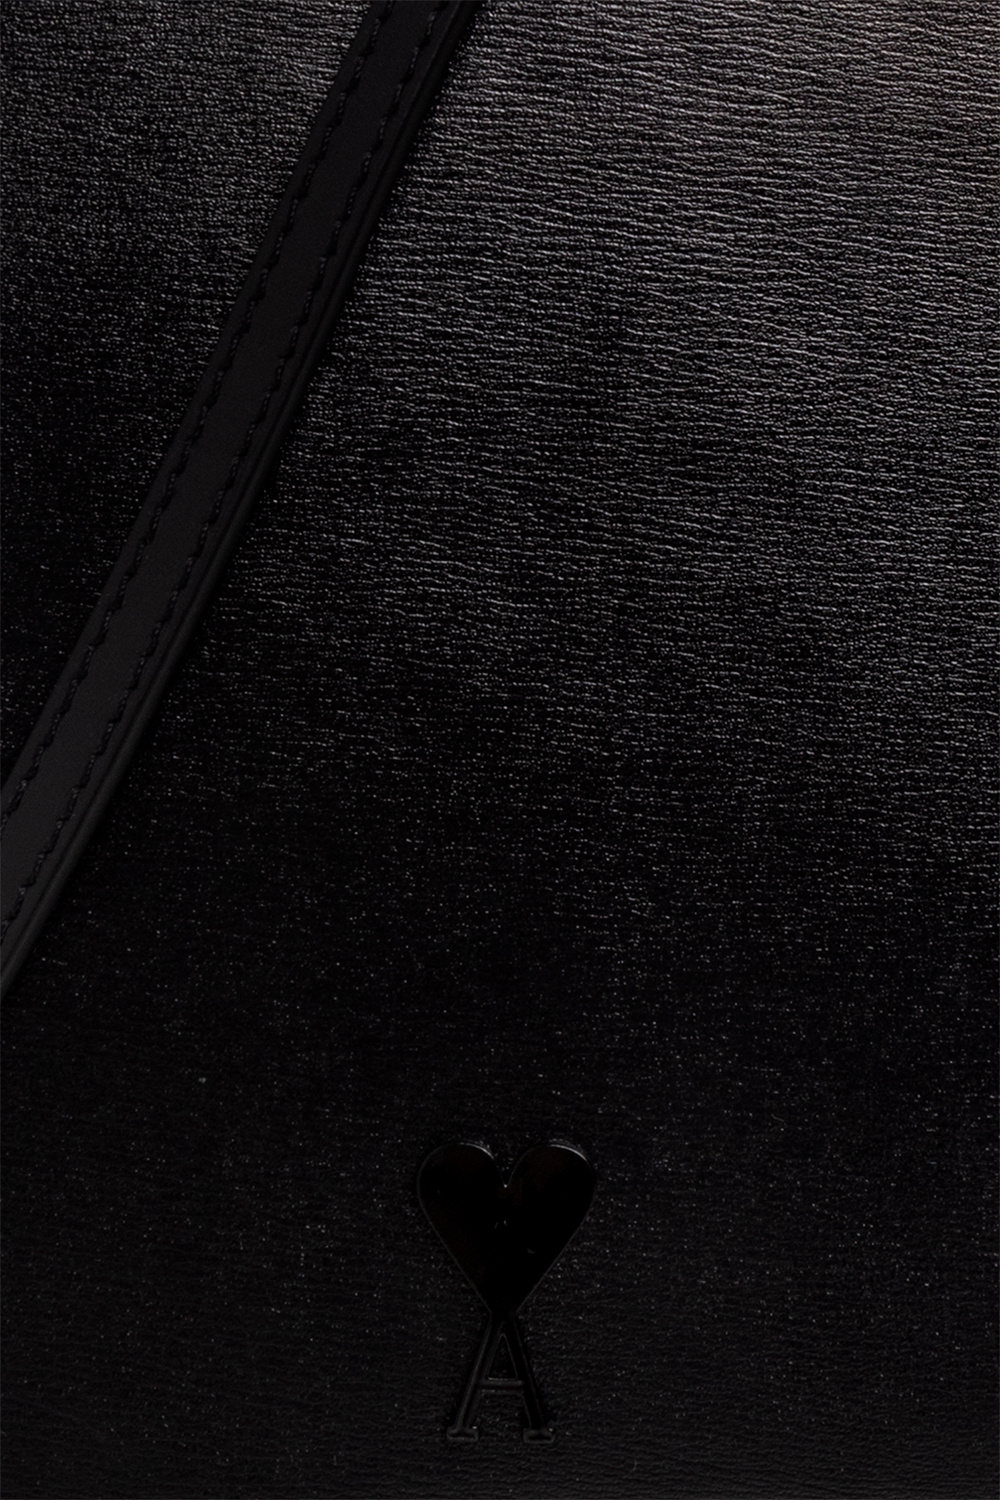 Ami Alexandre Mattiussi Leather shoulder FERRAGAMO bag